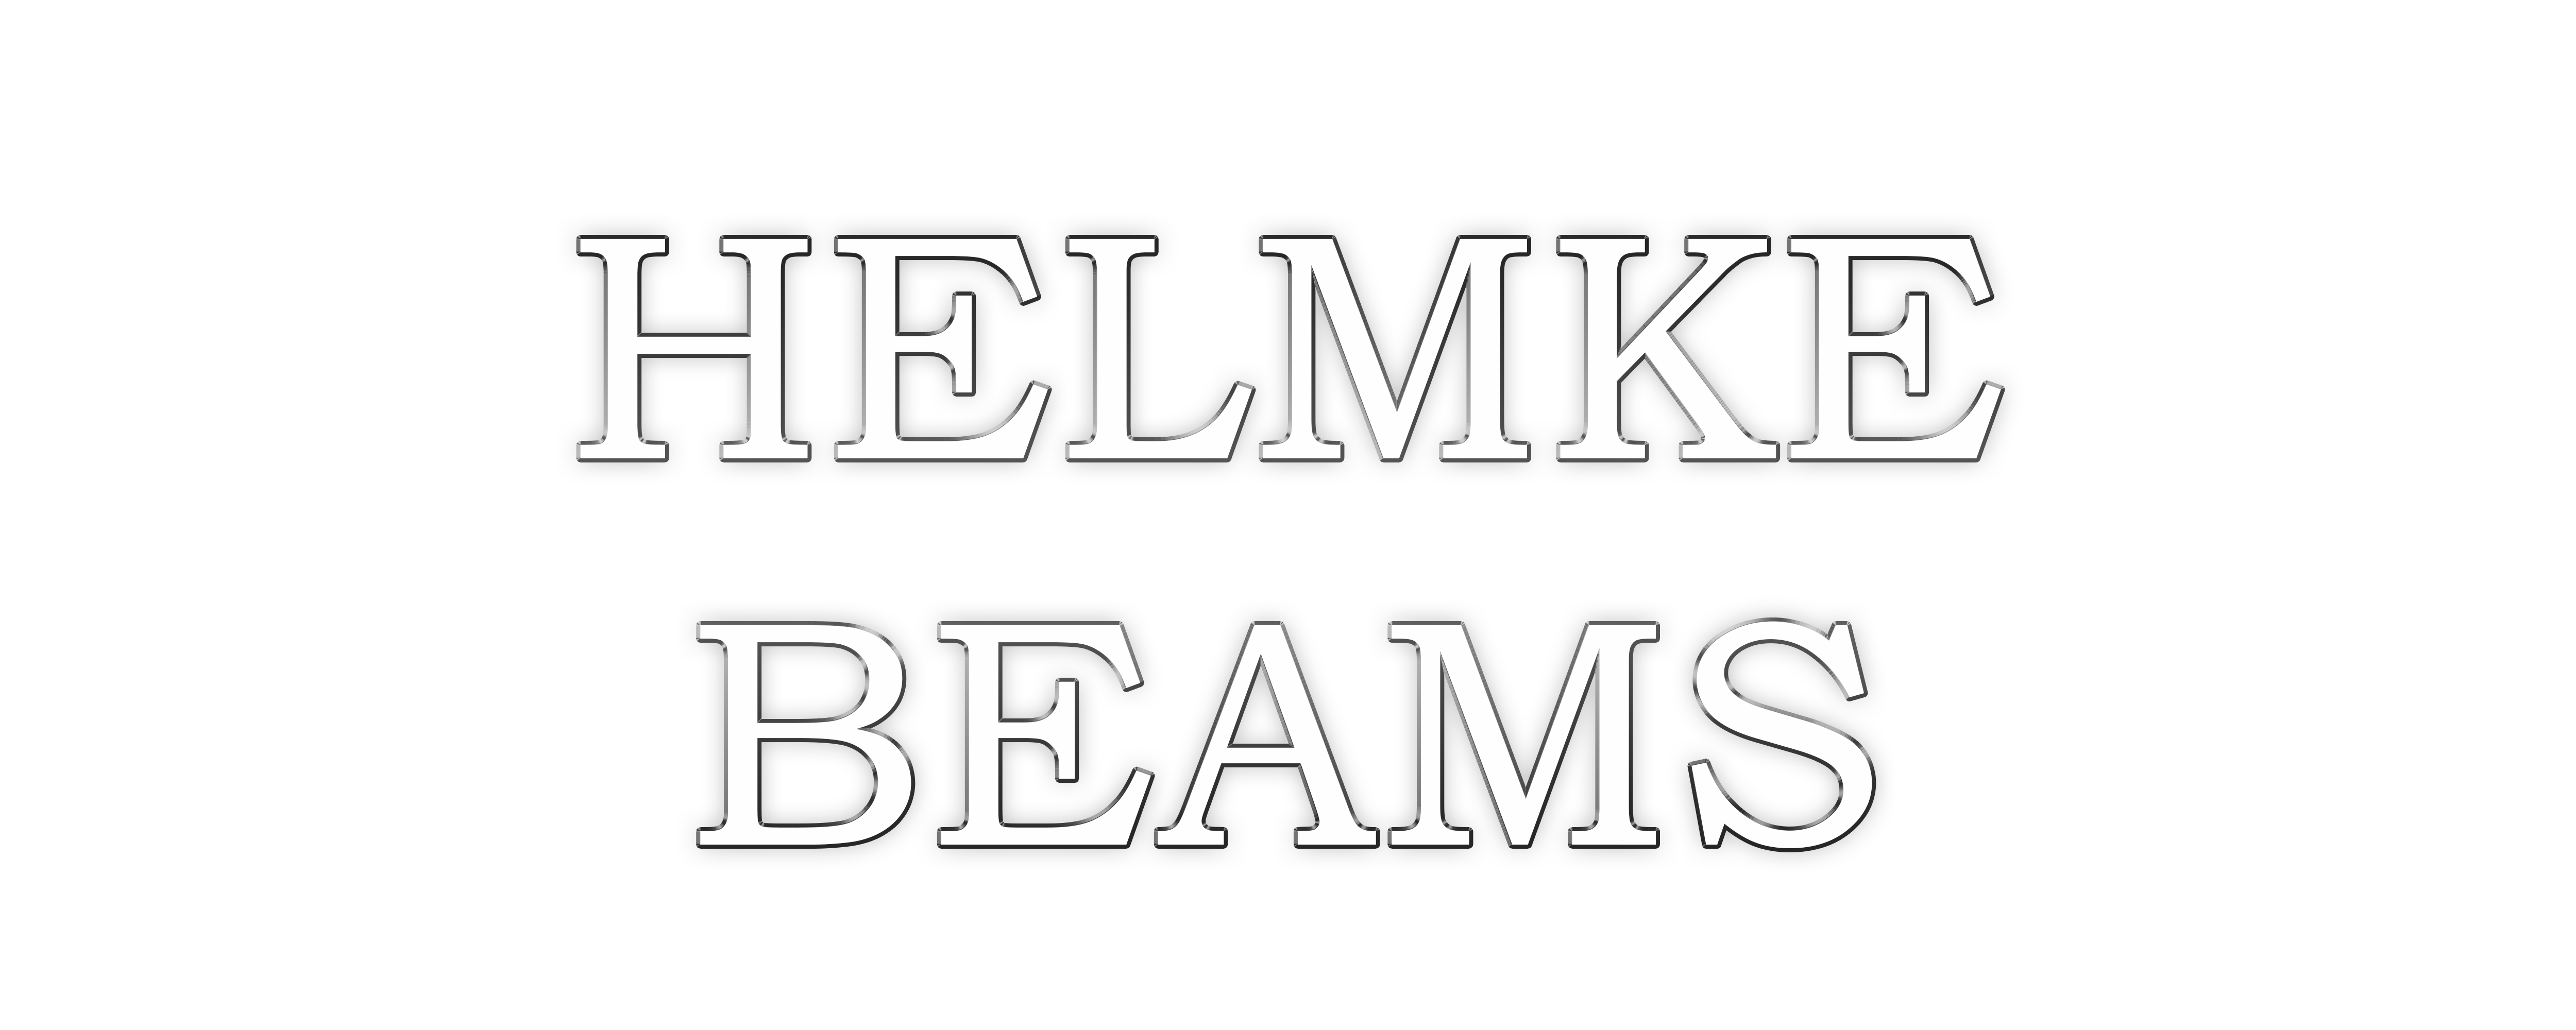 helmke beams logo white